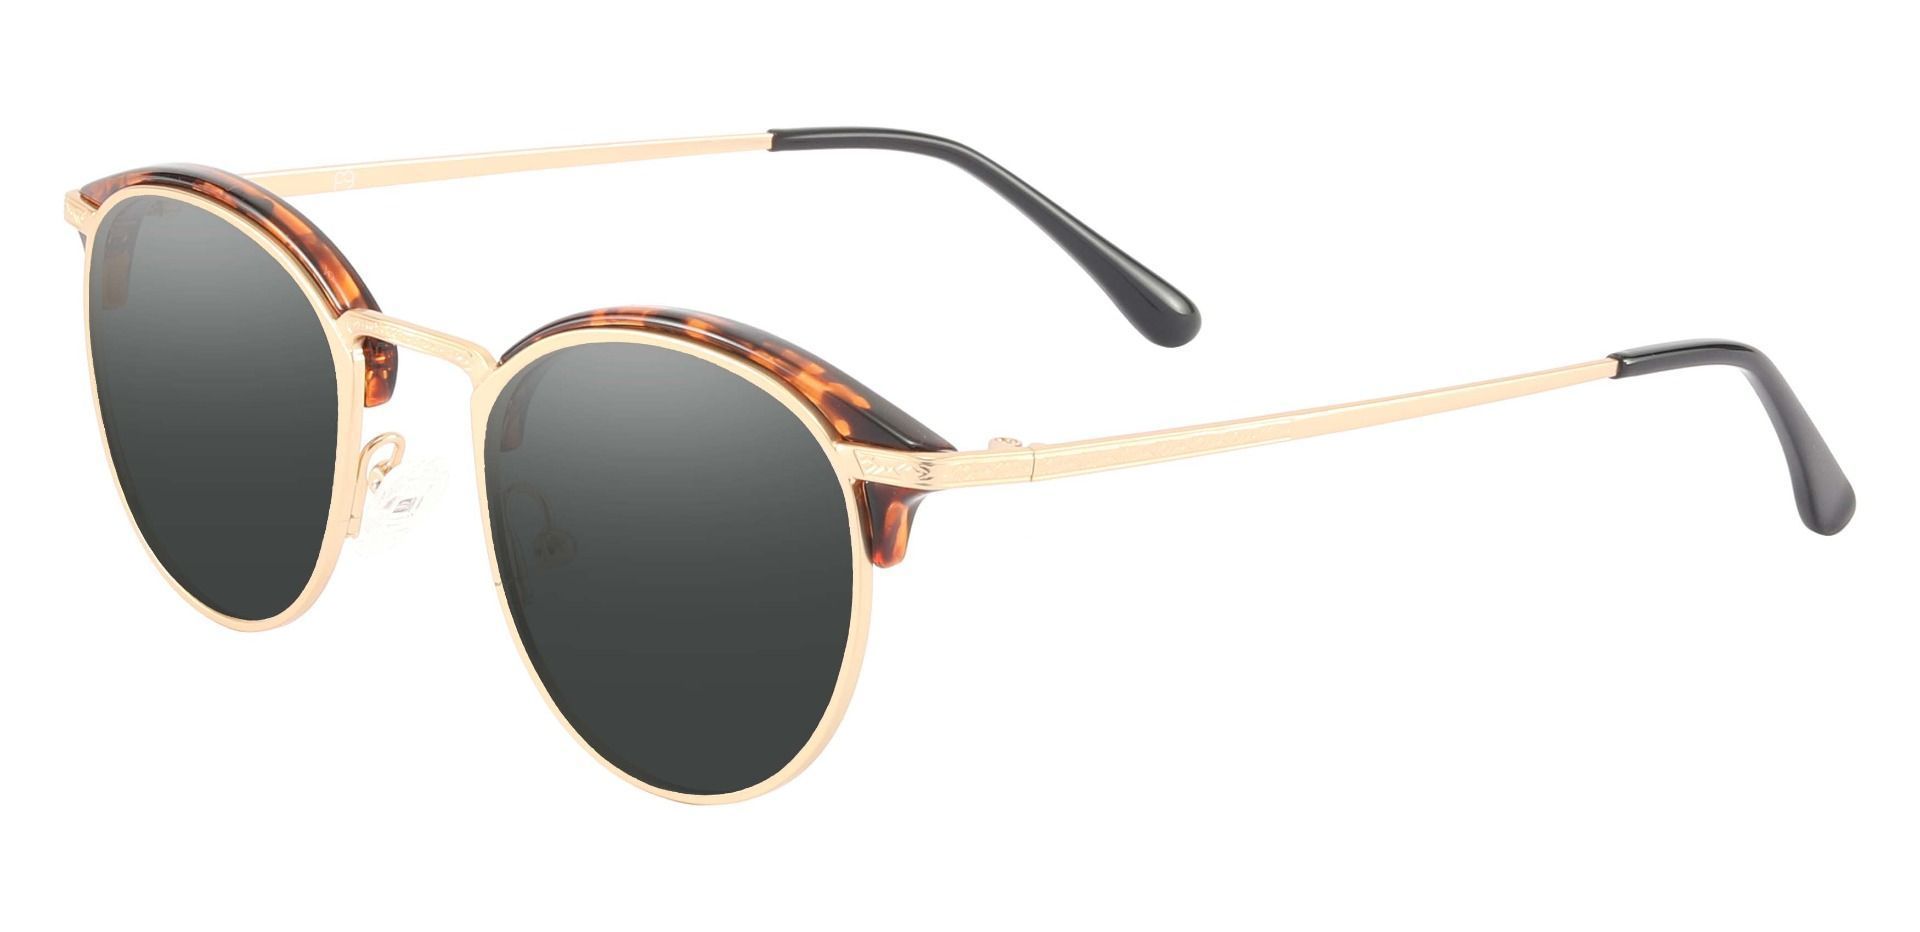 Shultz Browline Prescription Sunglasses - Gold Frame With Gray Lenses